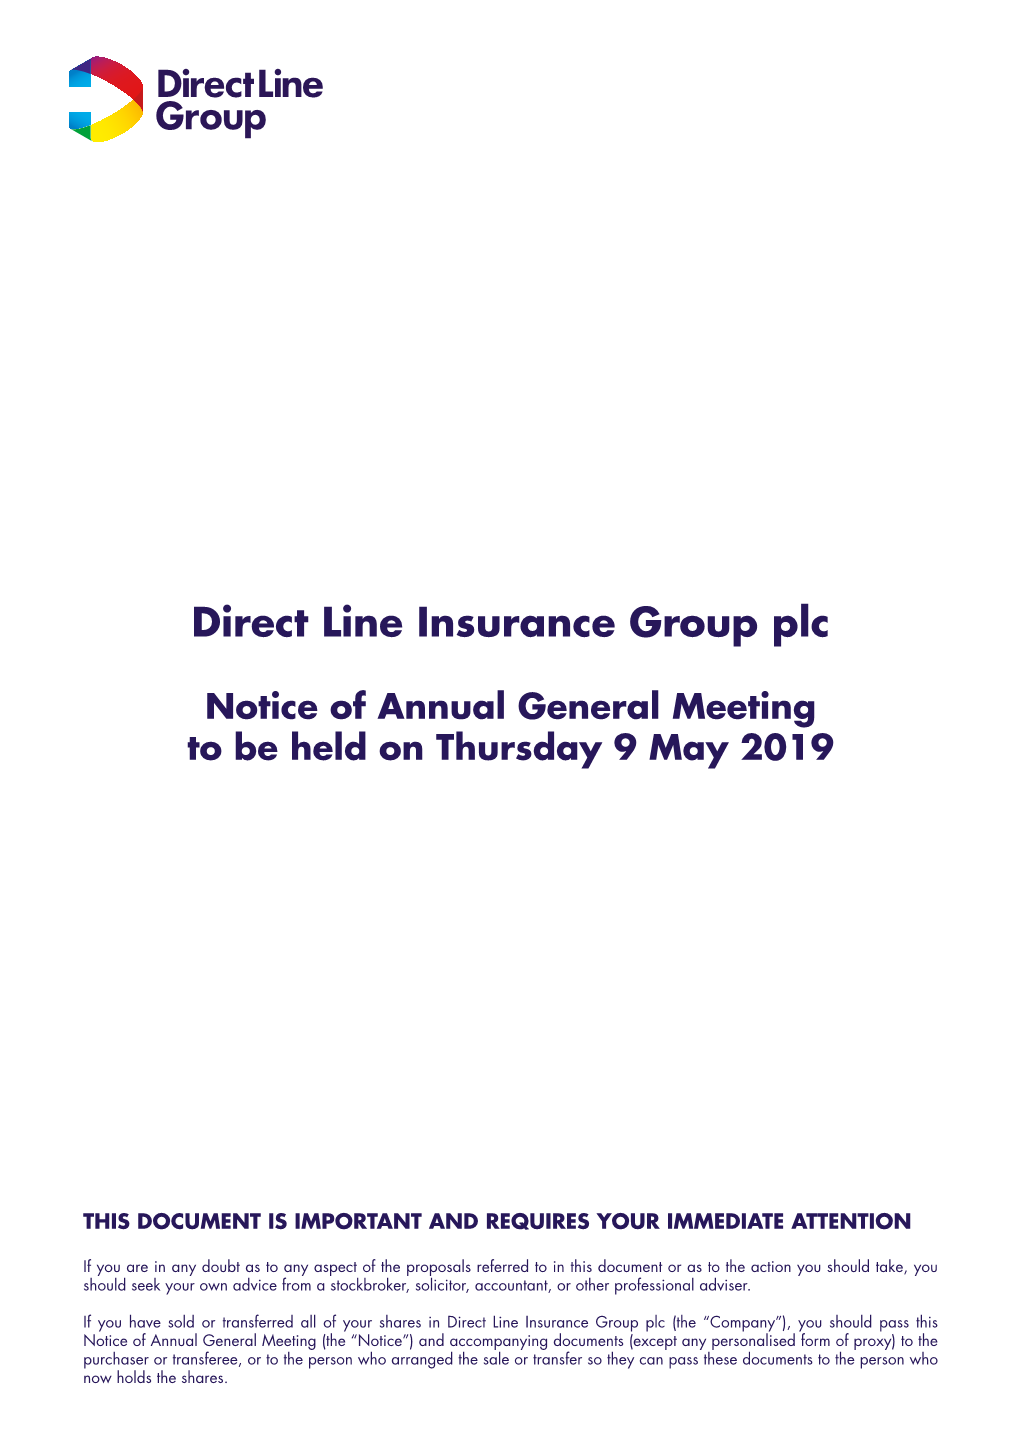 Direct Line Insurance Group Plc